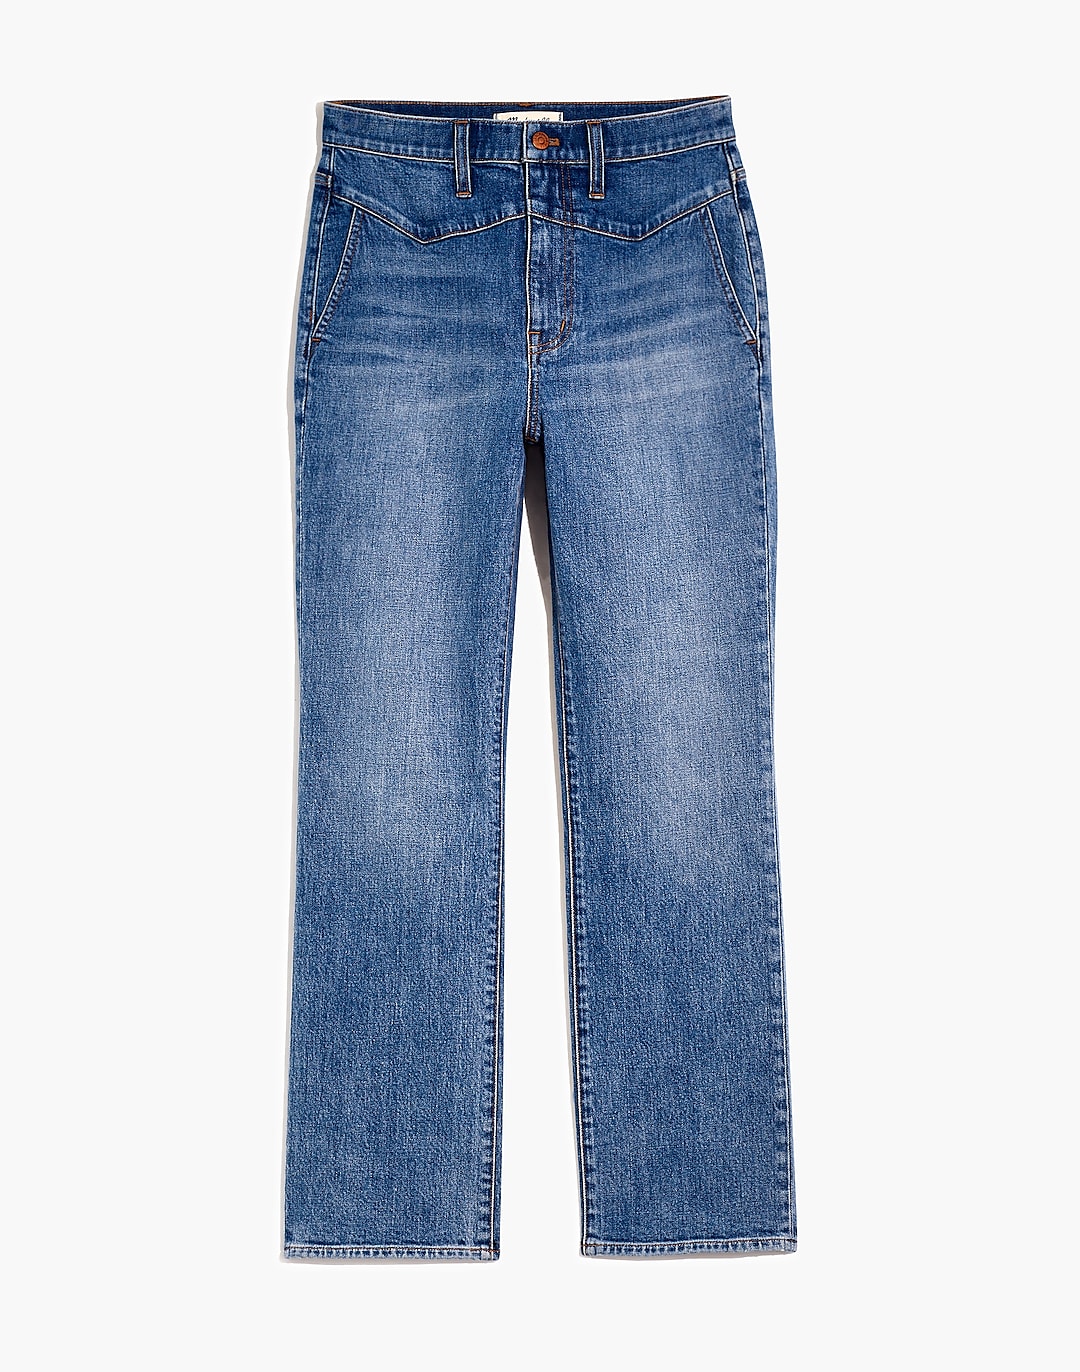 Slim Demi-Boot Jeans in Tracy Wash: Western Yoke Edition